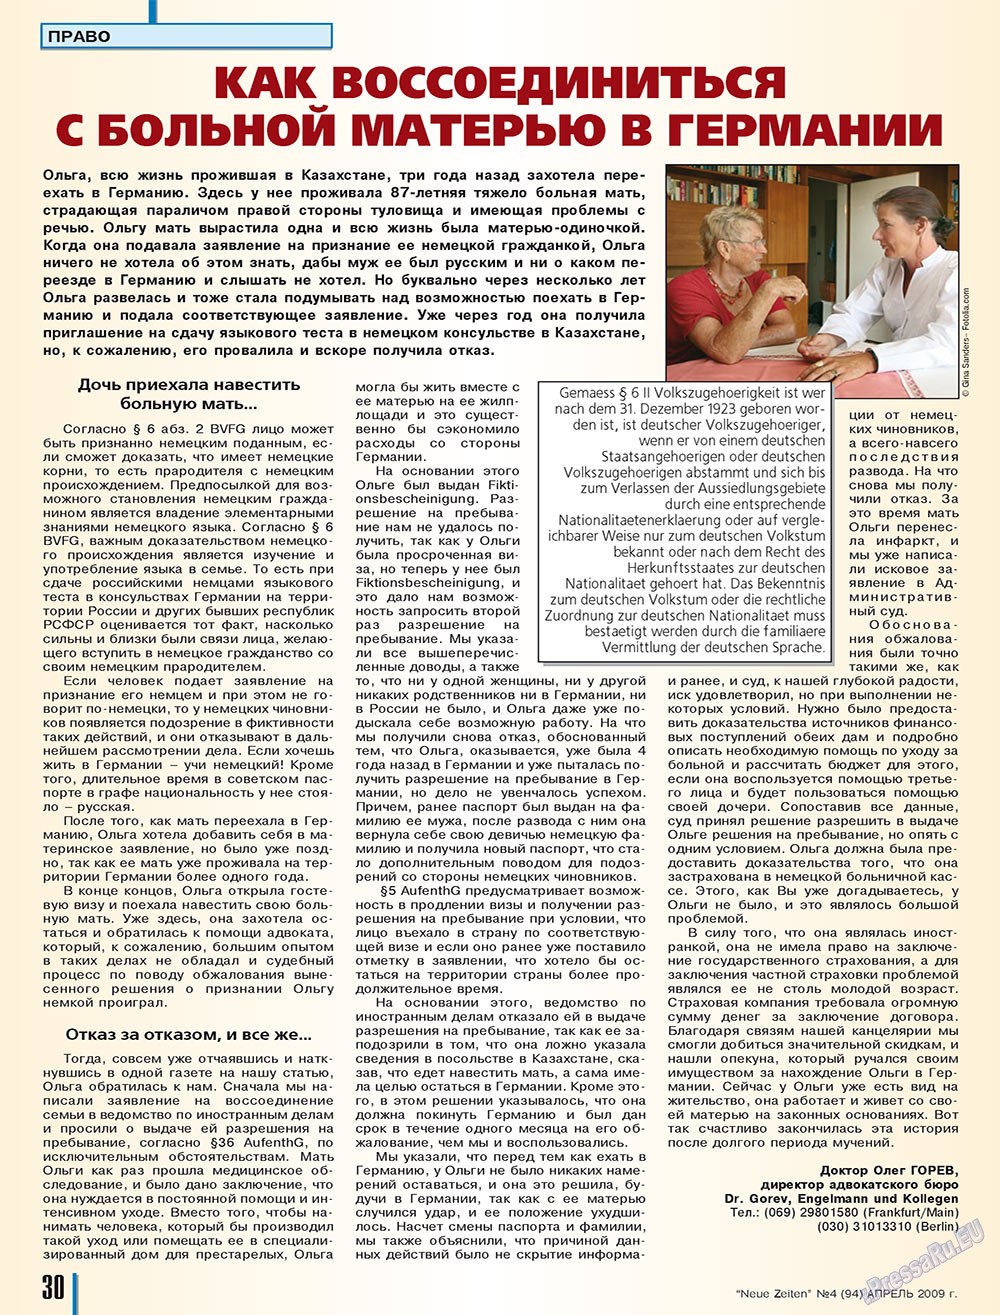 Neue Zeiten (журнал). 2009 год, номер 4, стр. 30